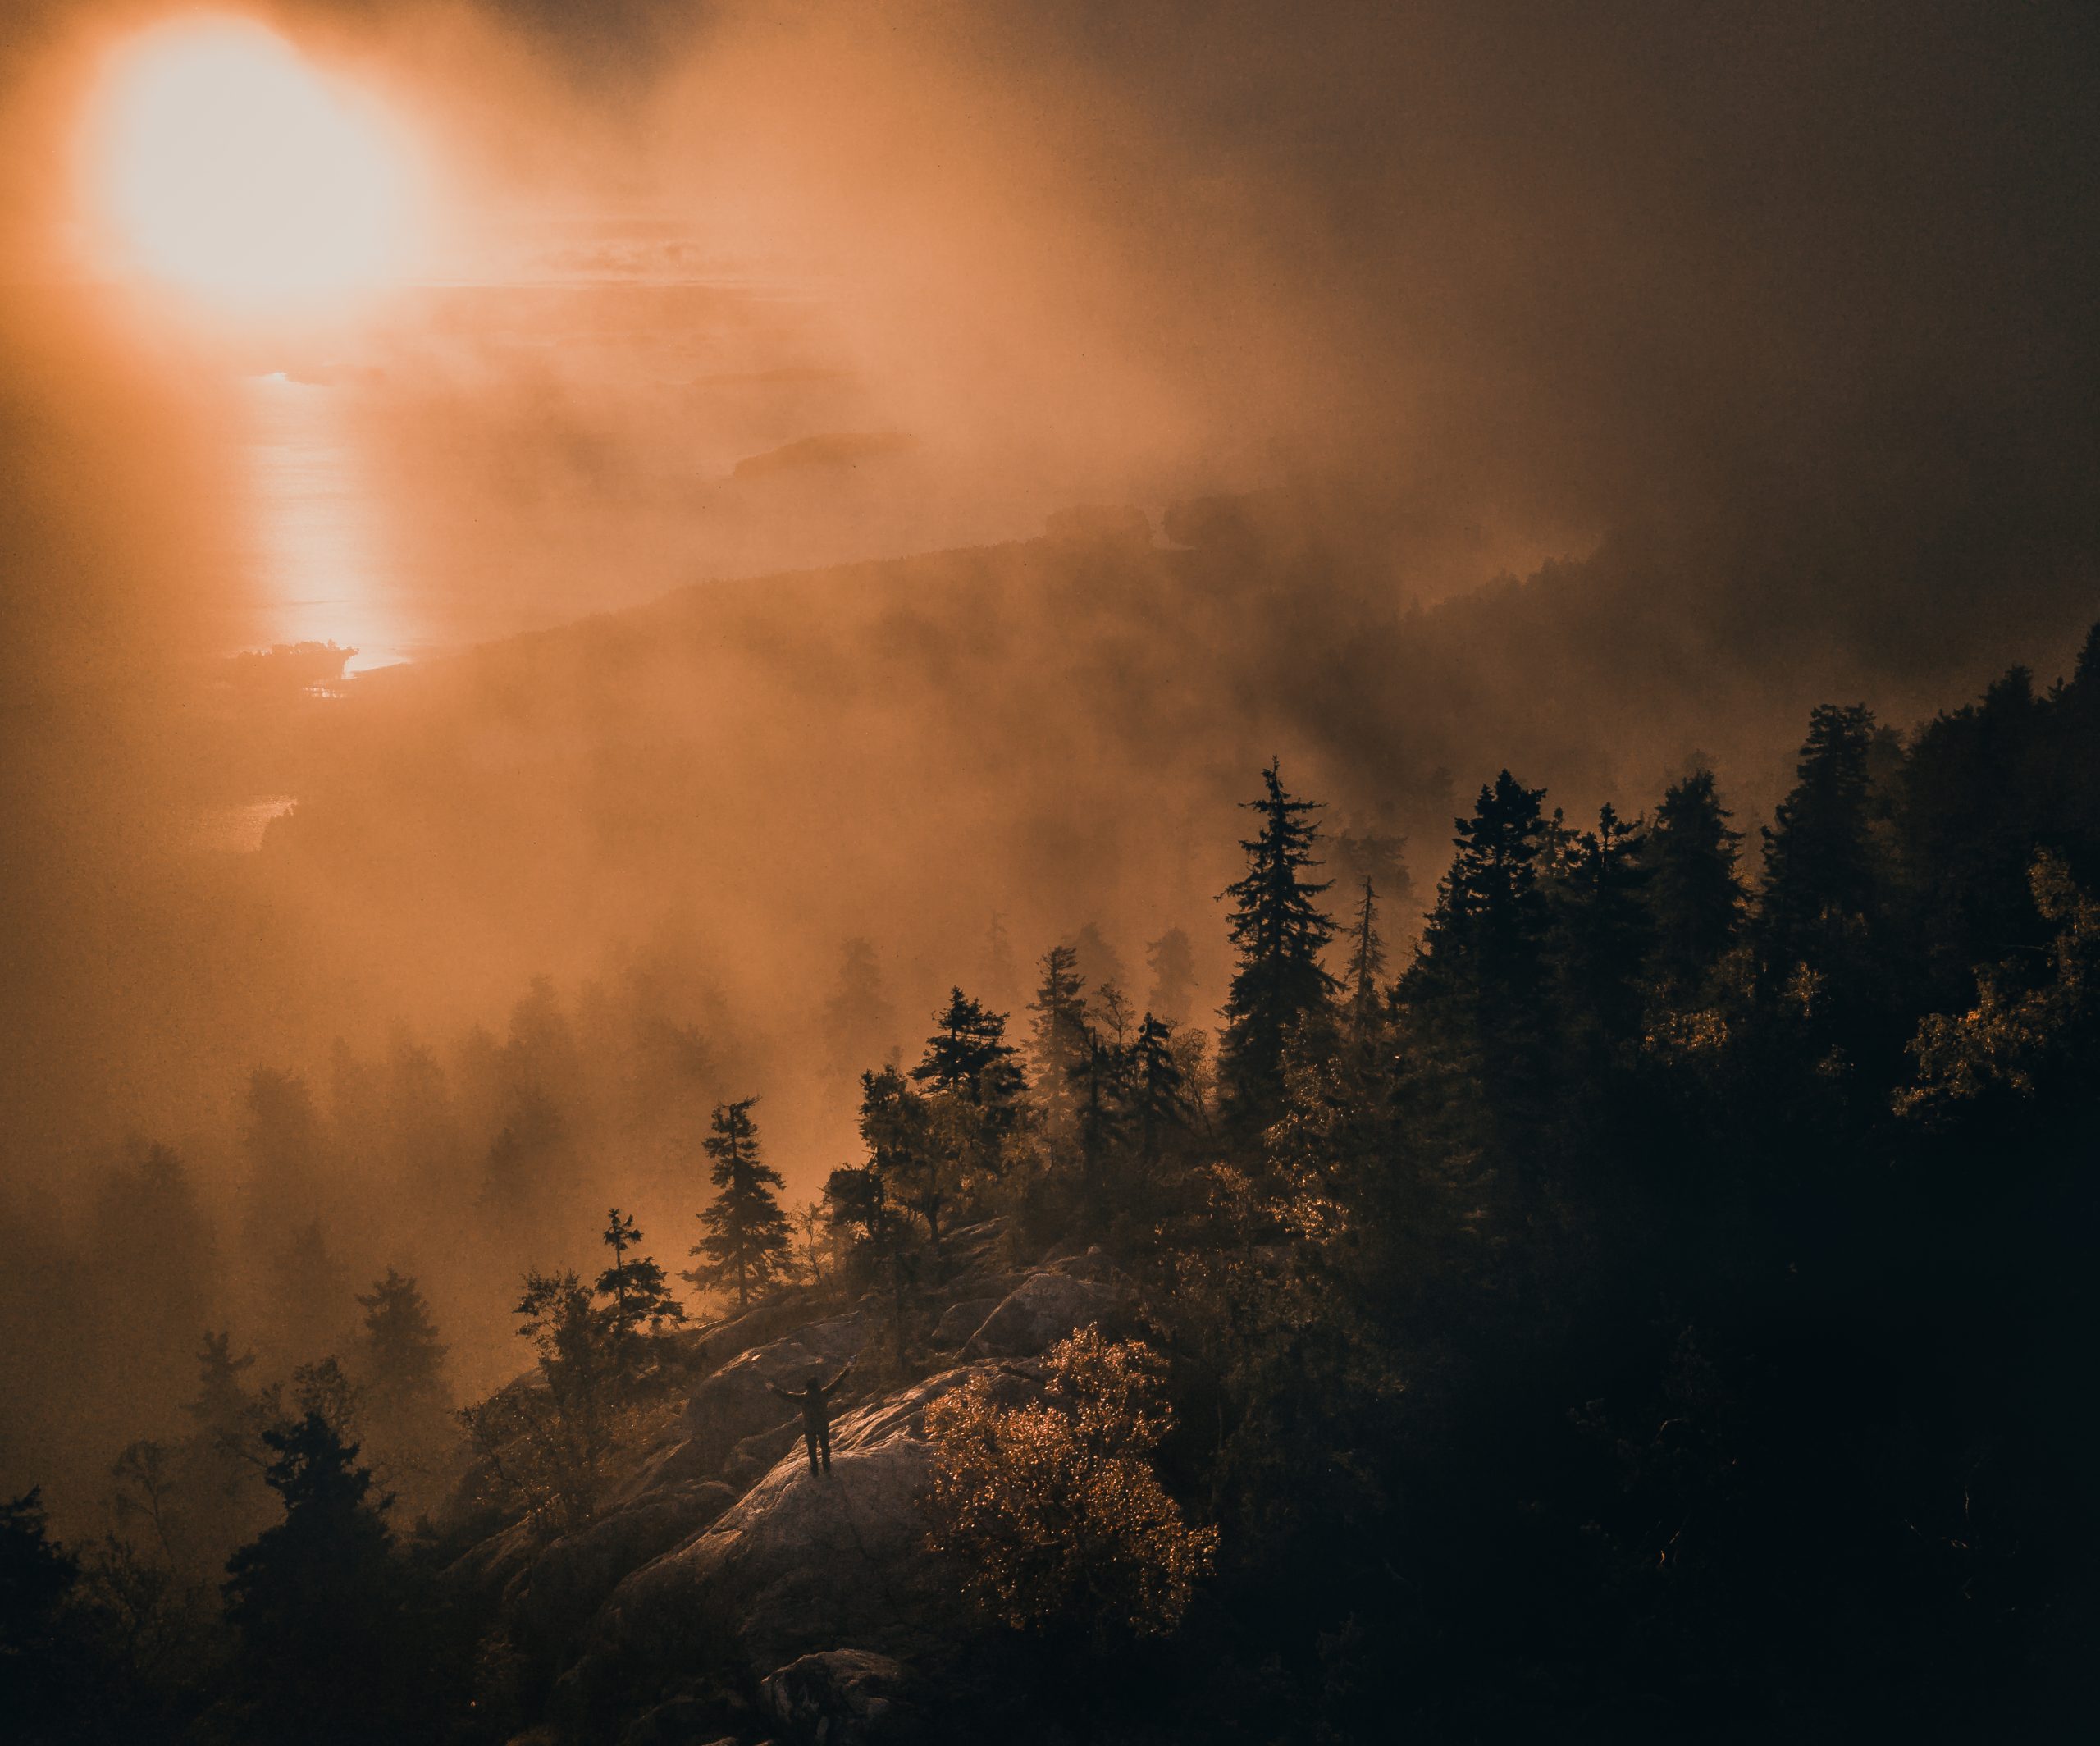 Sun shining over a misty forest